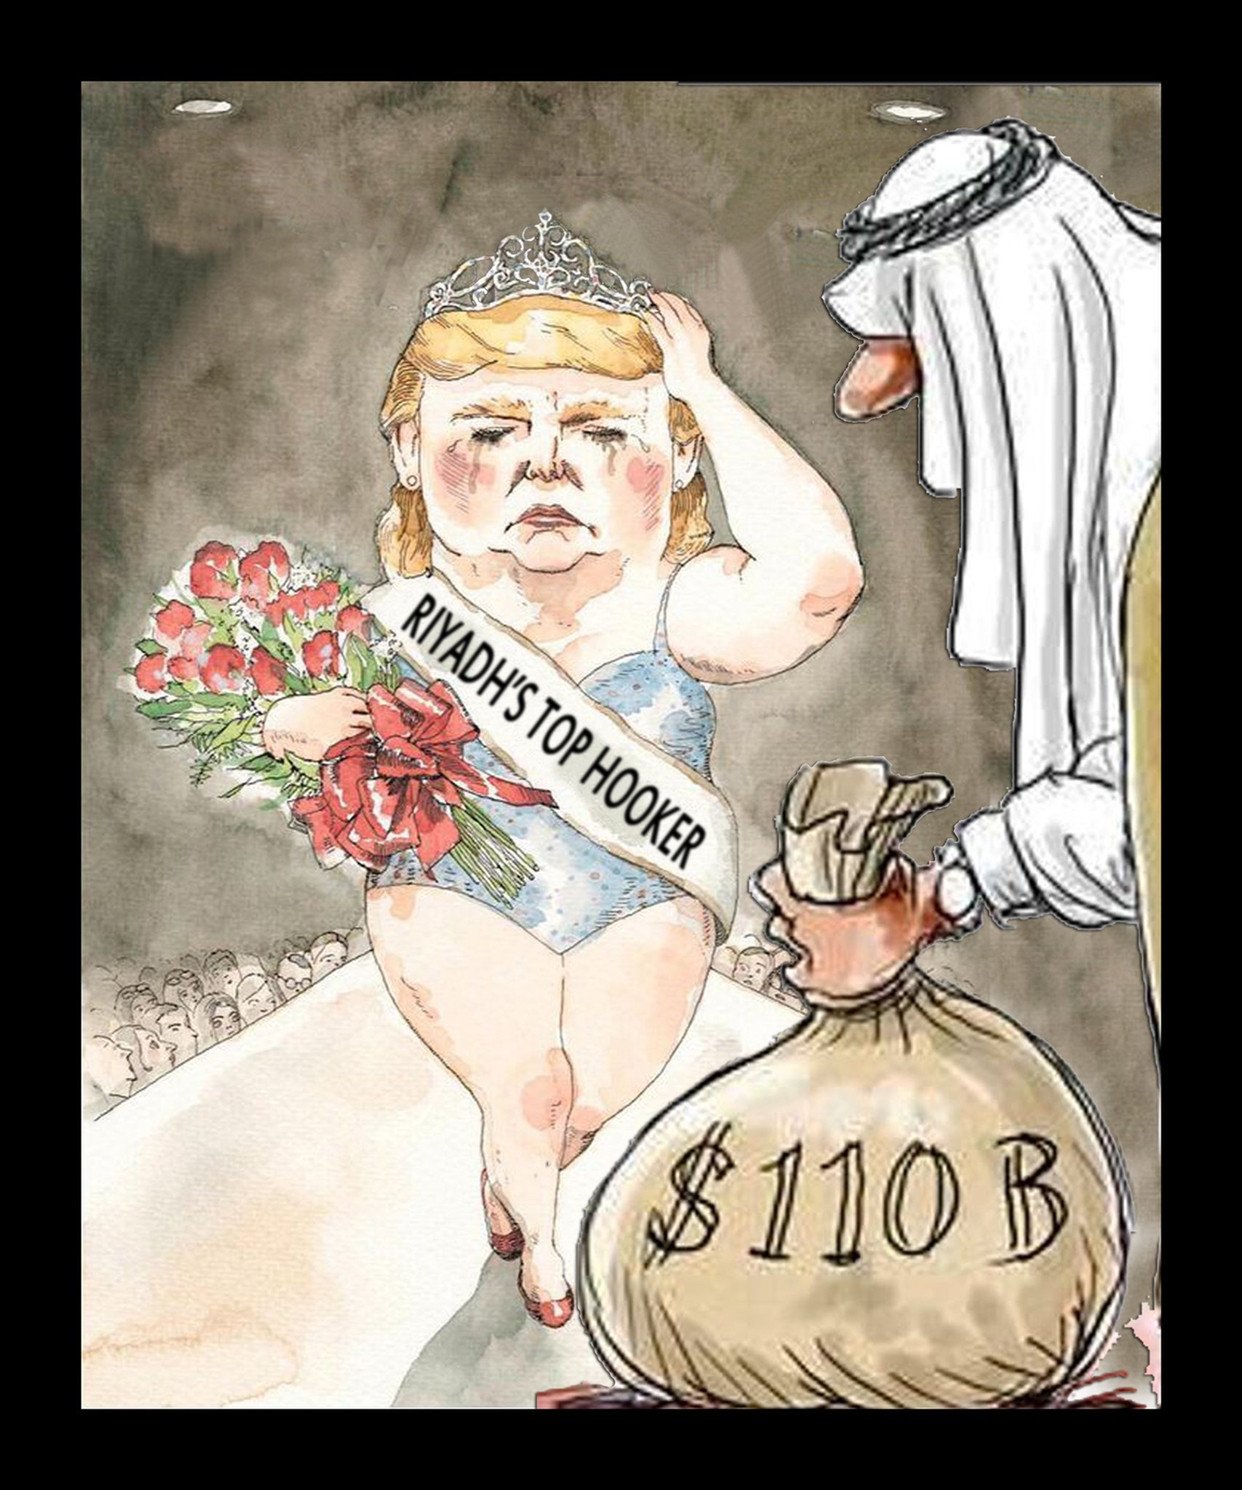 political meme new yorker miss congeniality - Riyadh'S Top Hooker $110B